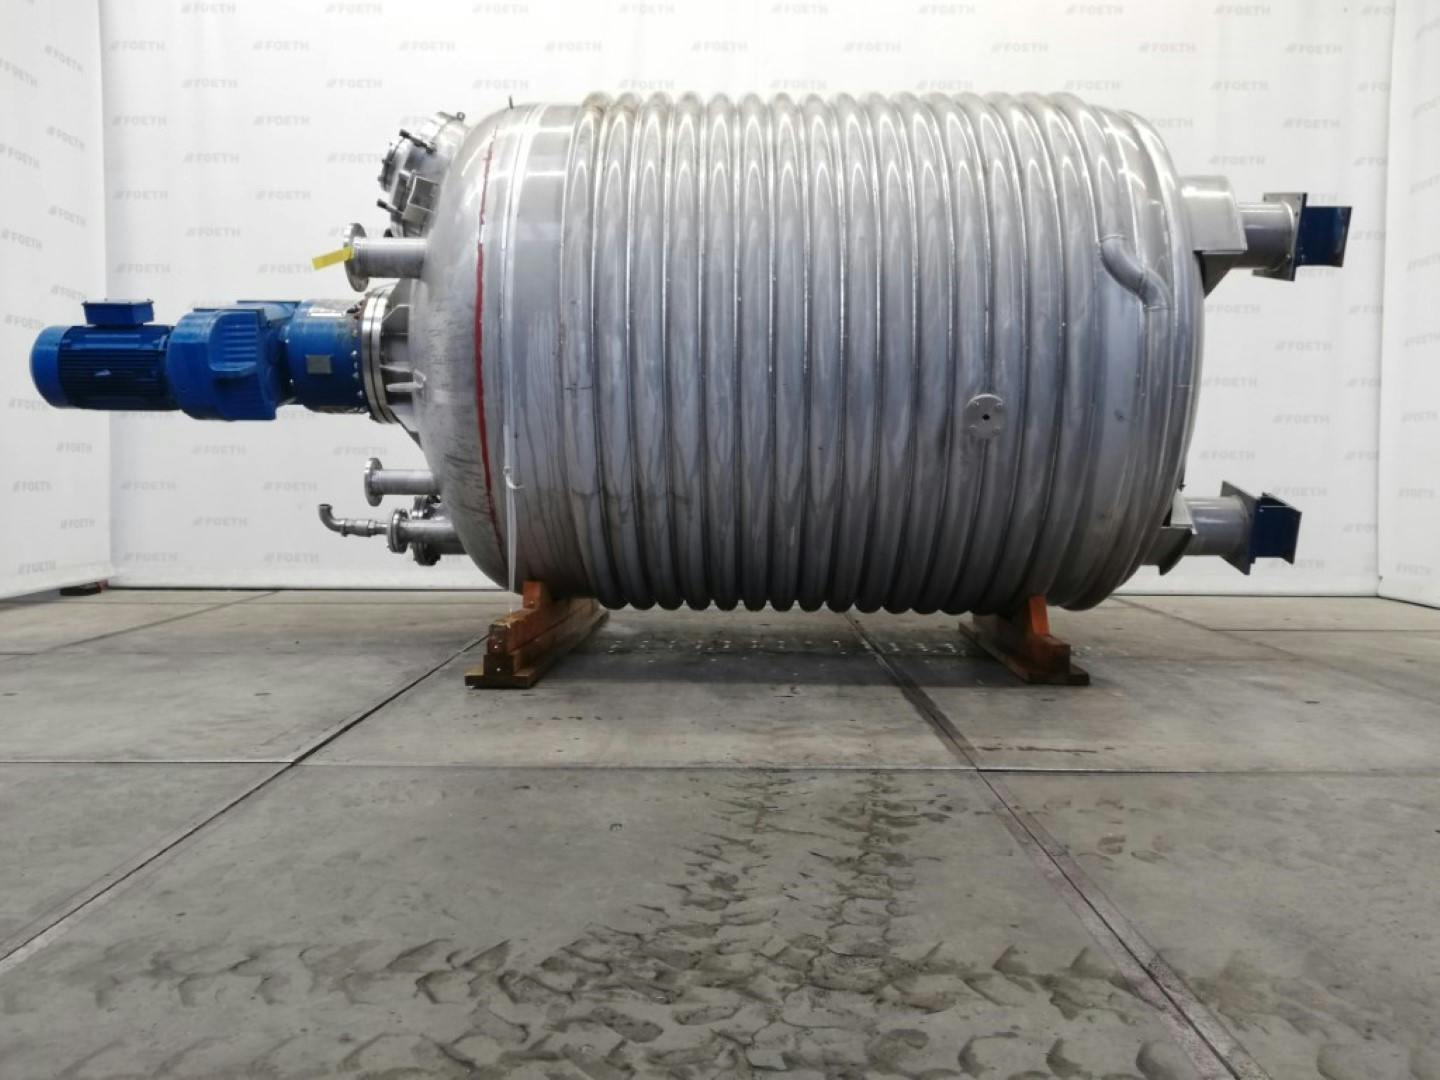 Rudert Edelstahl-Technik Reaktor 10m3 - Reactor de aço inoxidável